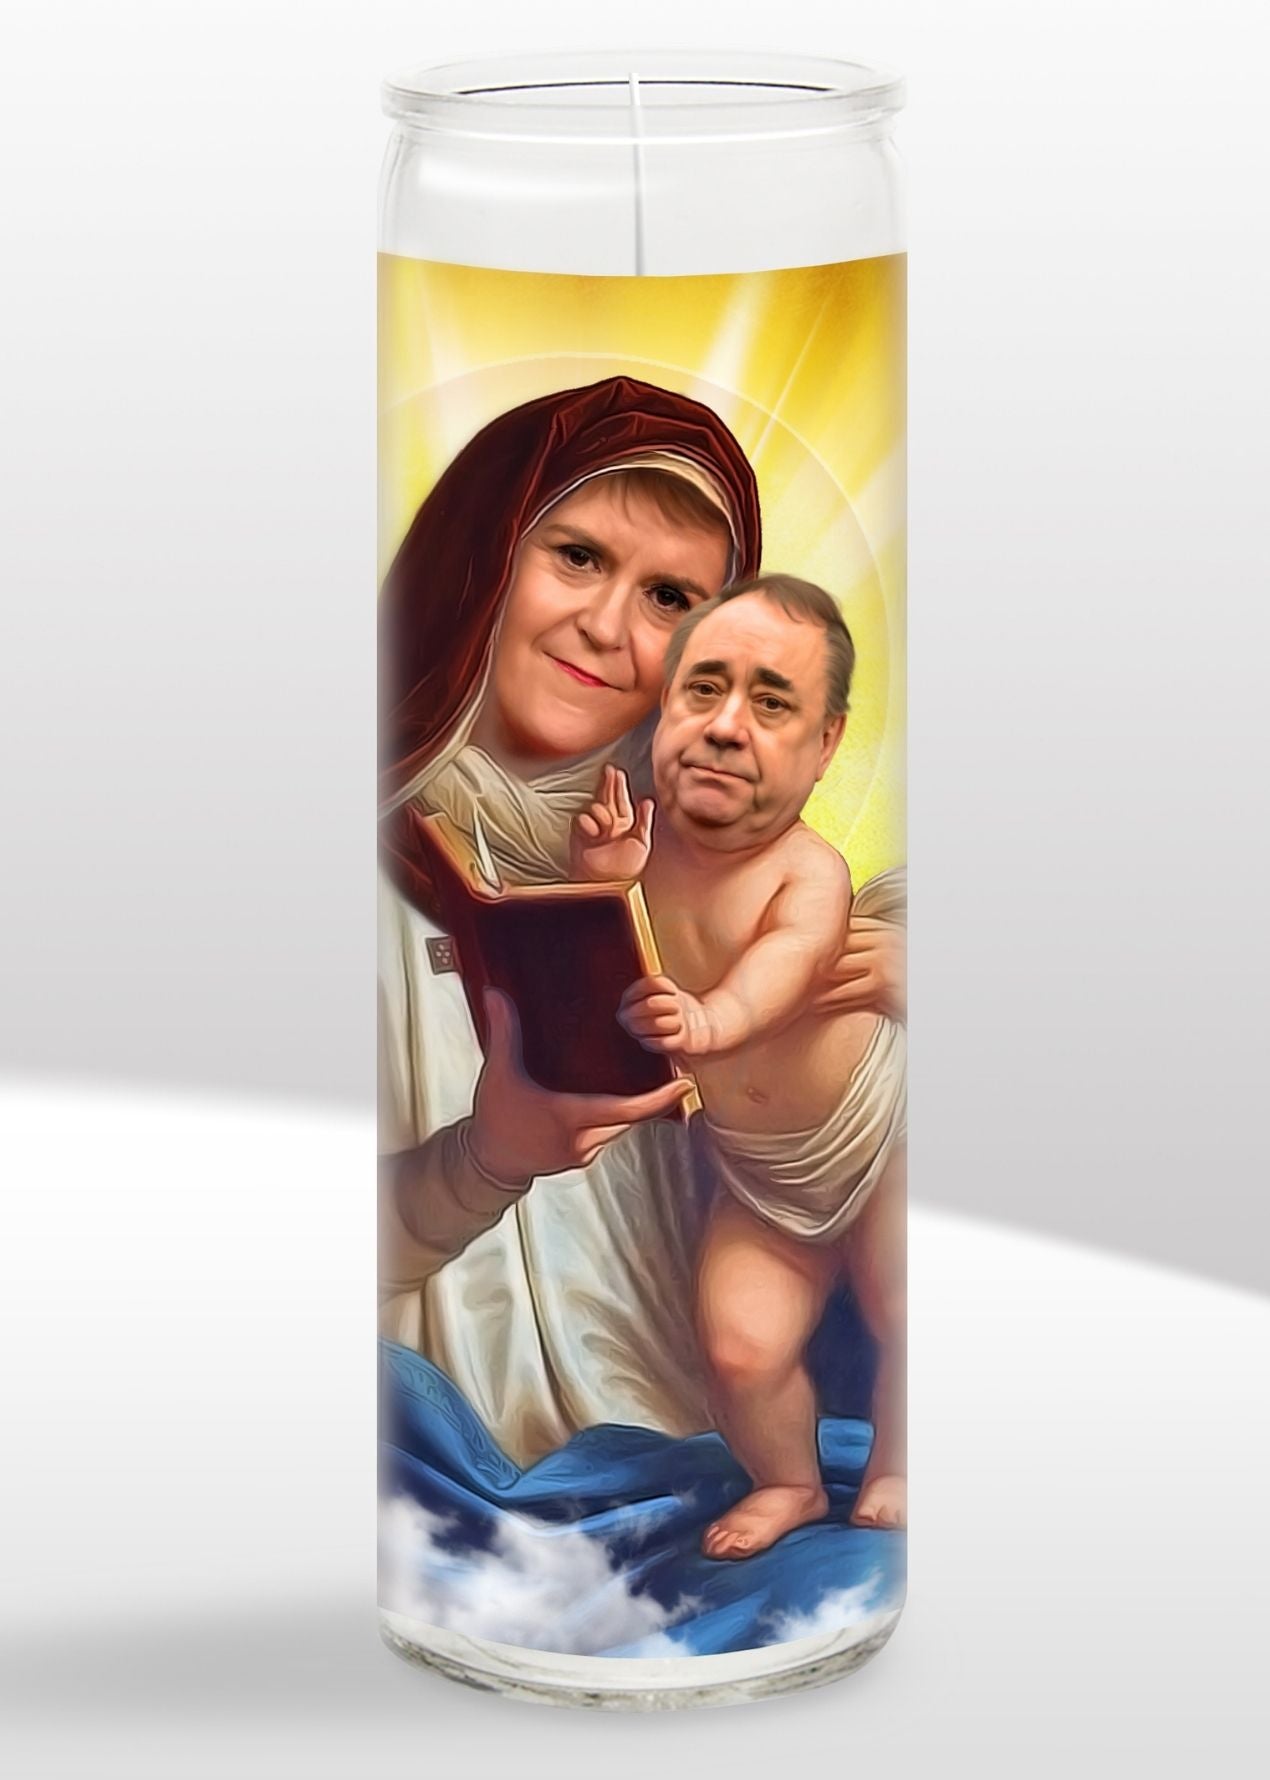 Nicola Sturgeon and Alex Salmond Candle